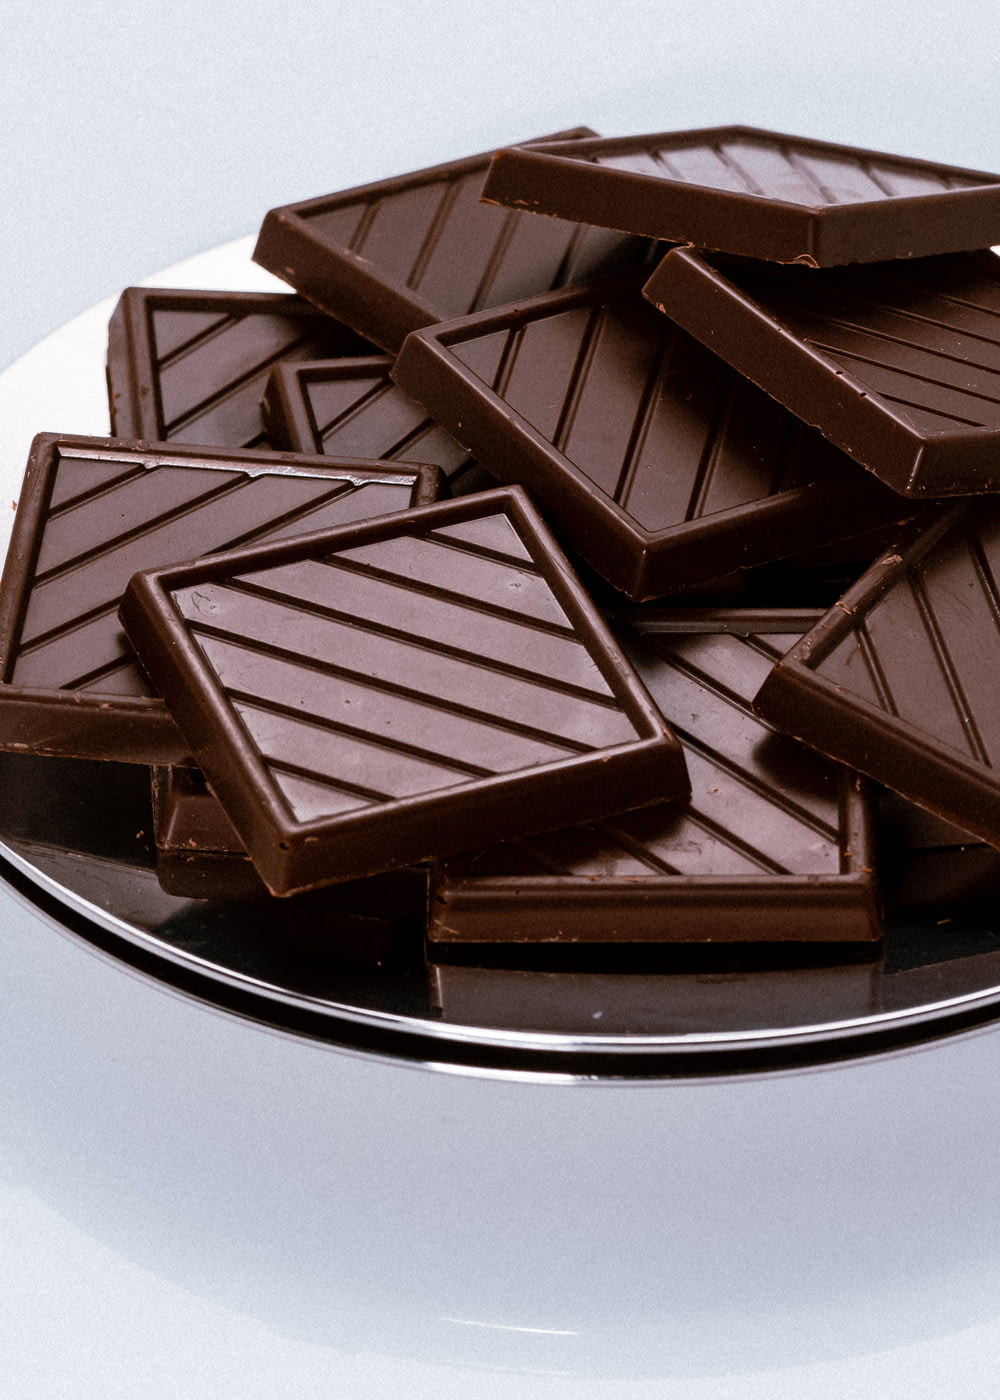 brown and white chocolate bar